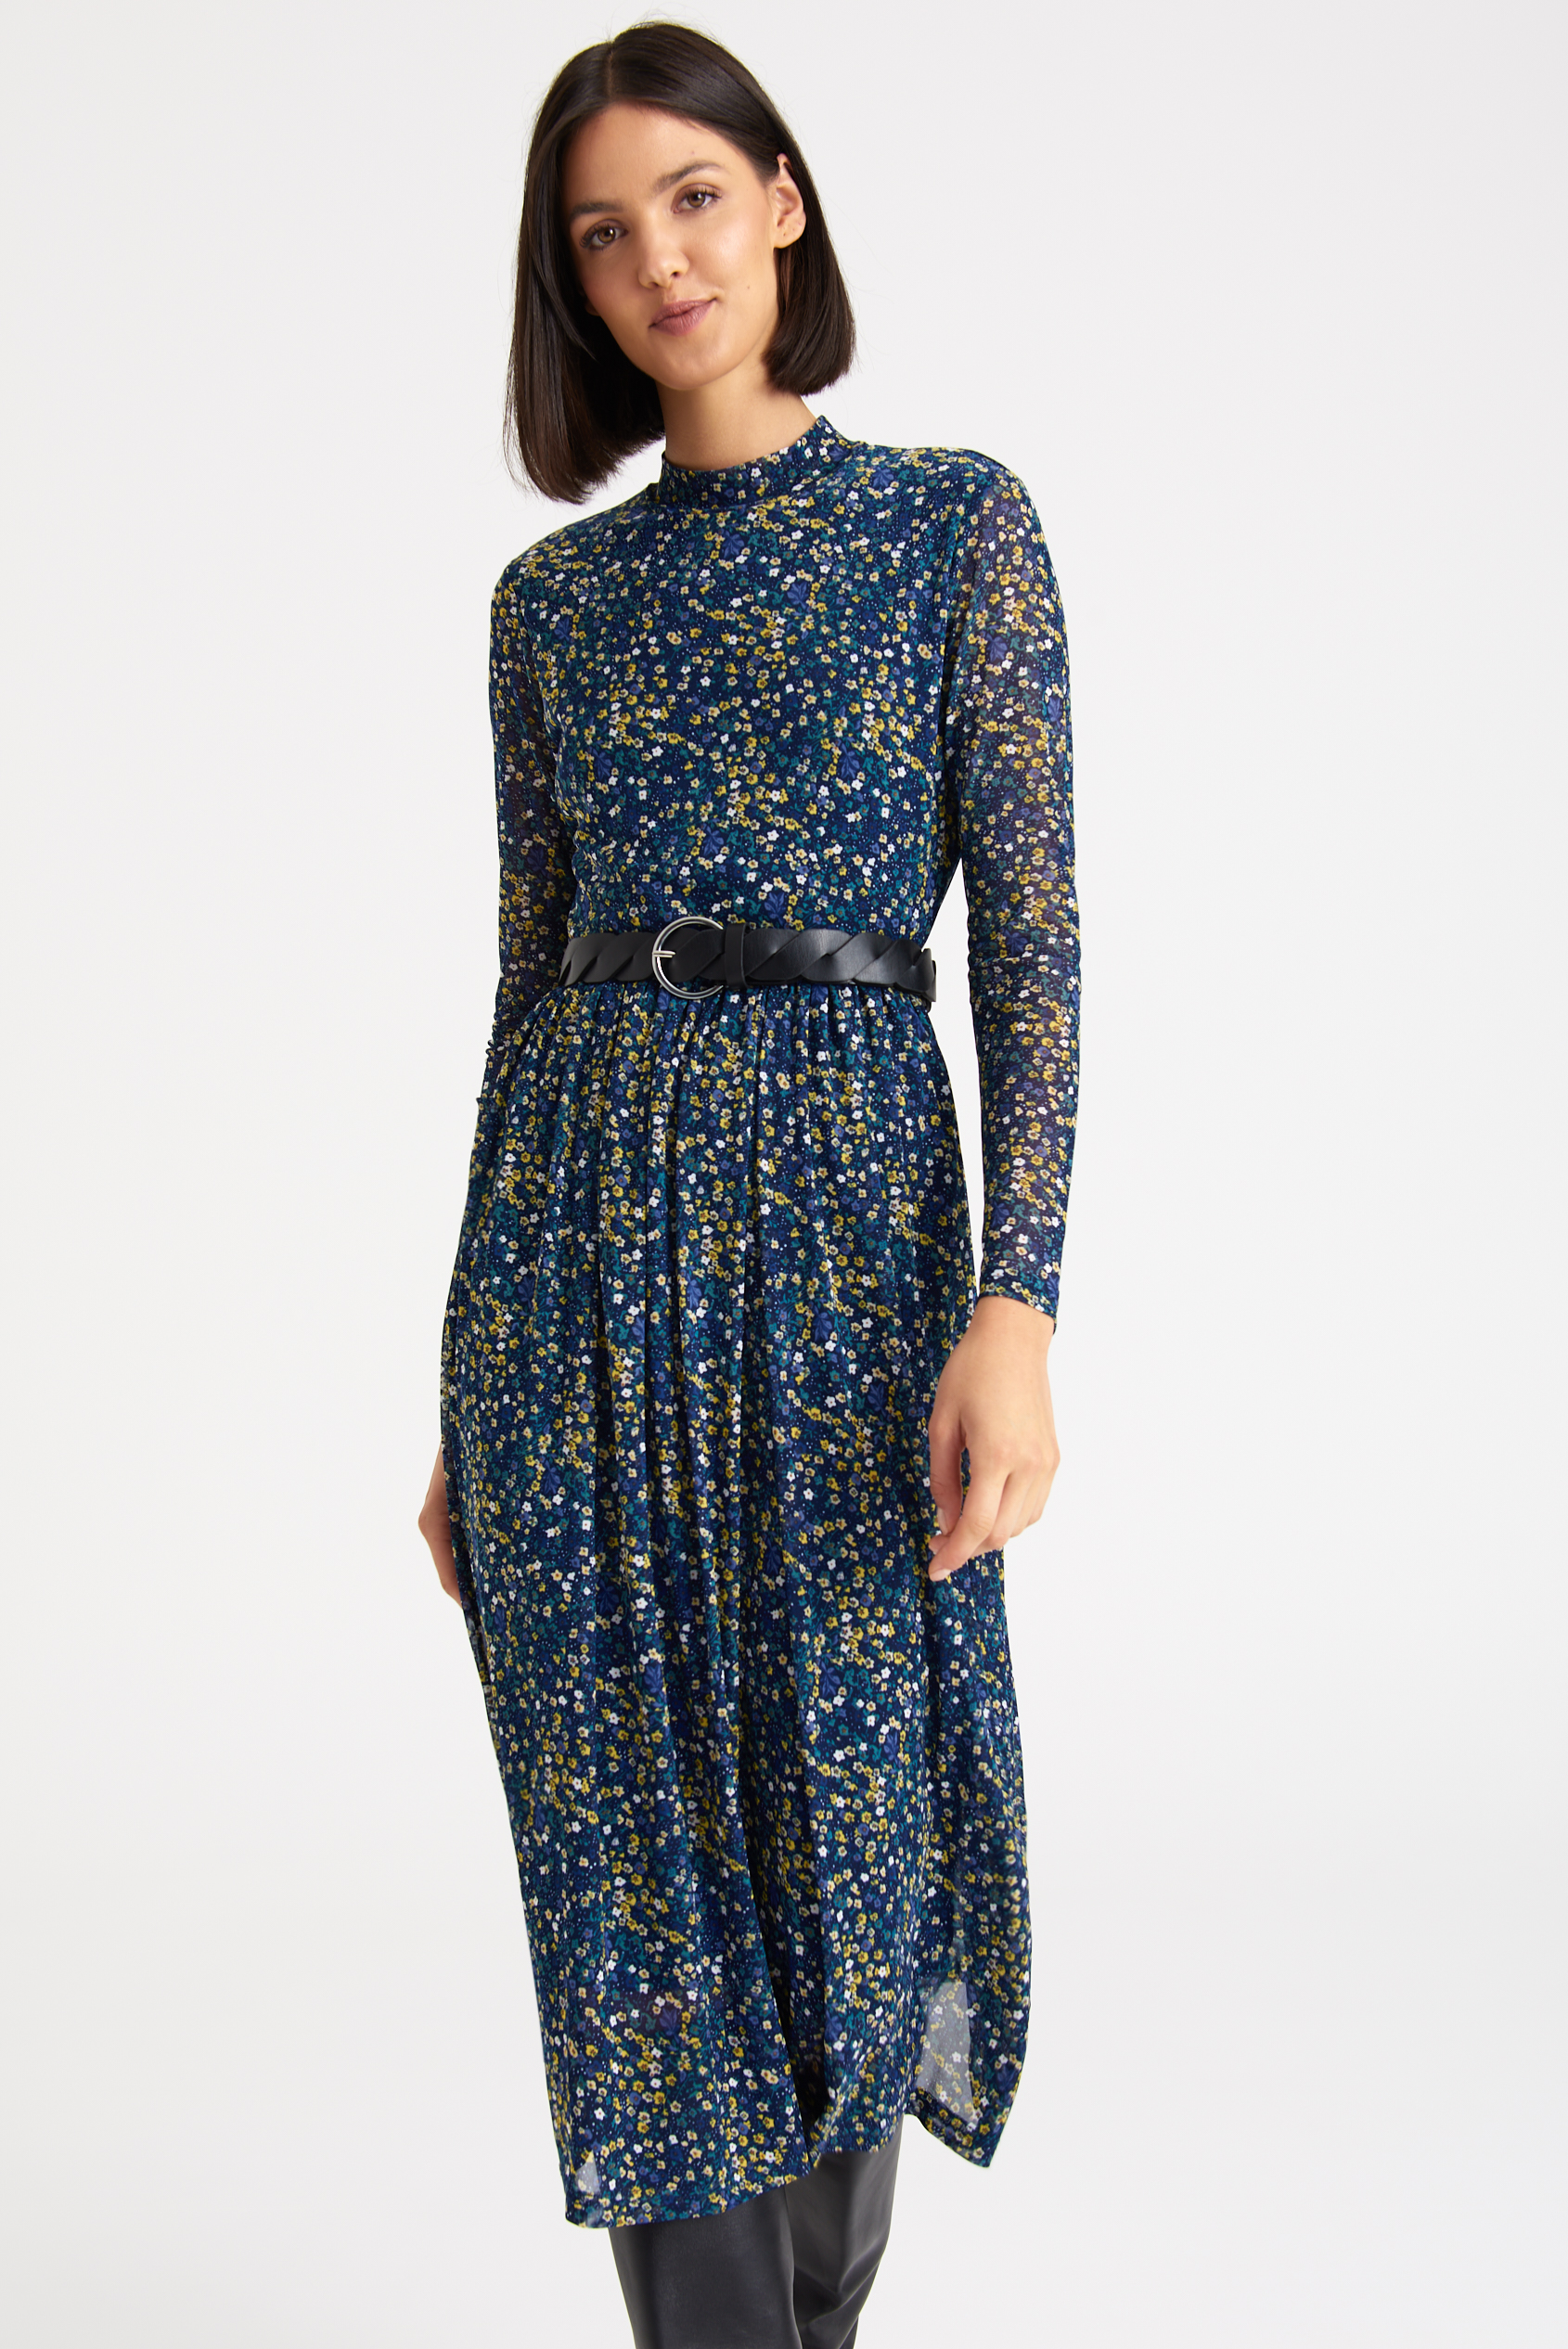 Ciemnoniebieska sukienka z półgolfem, nadruk typu "łączka"